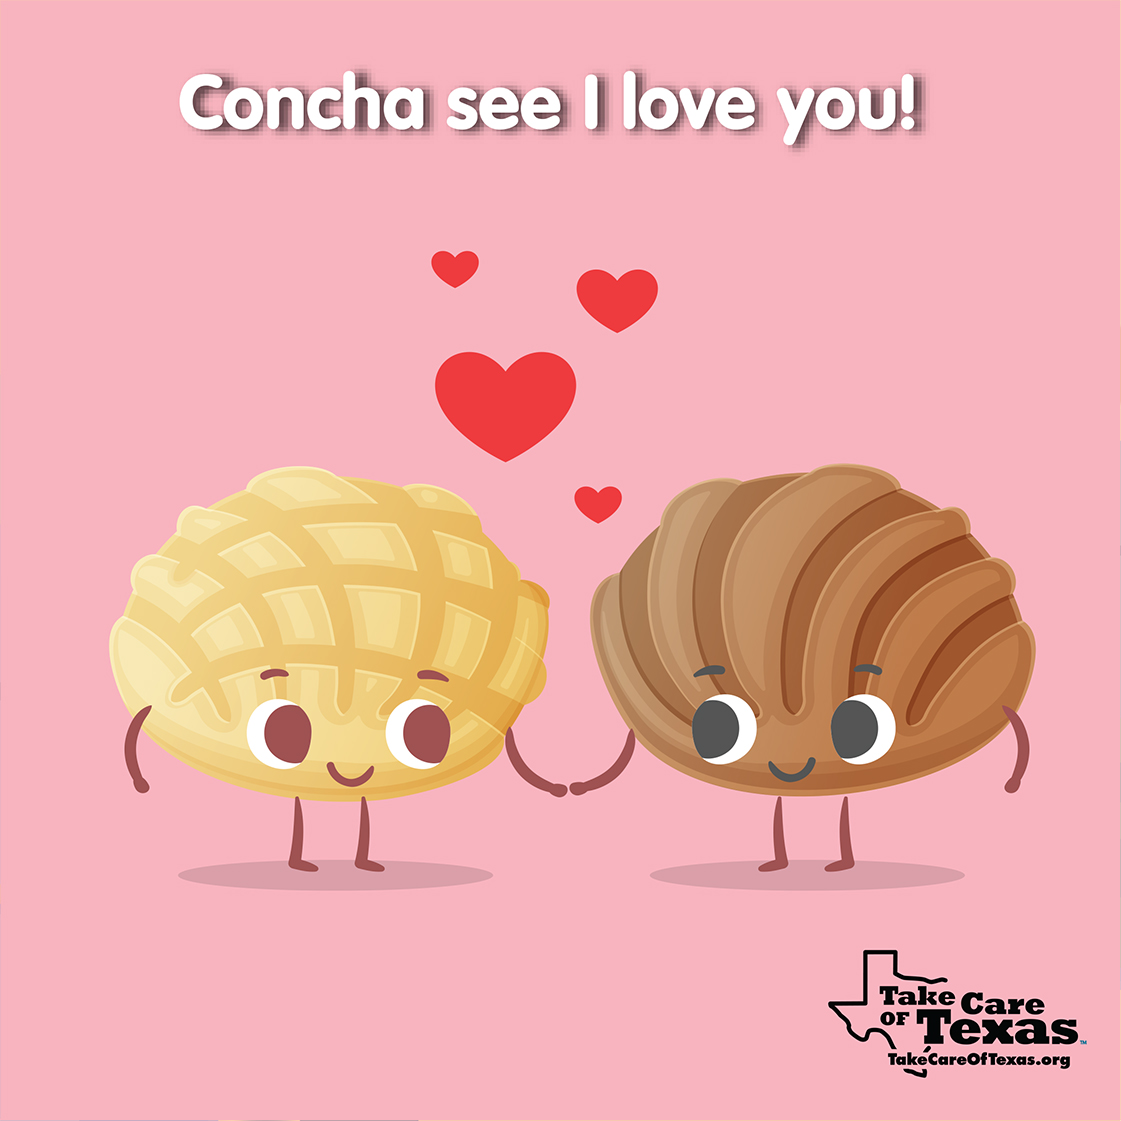 Concha see I love you.